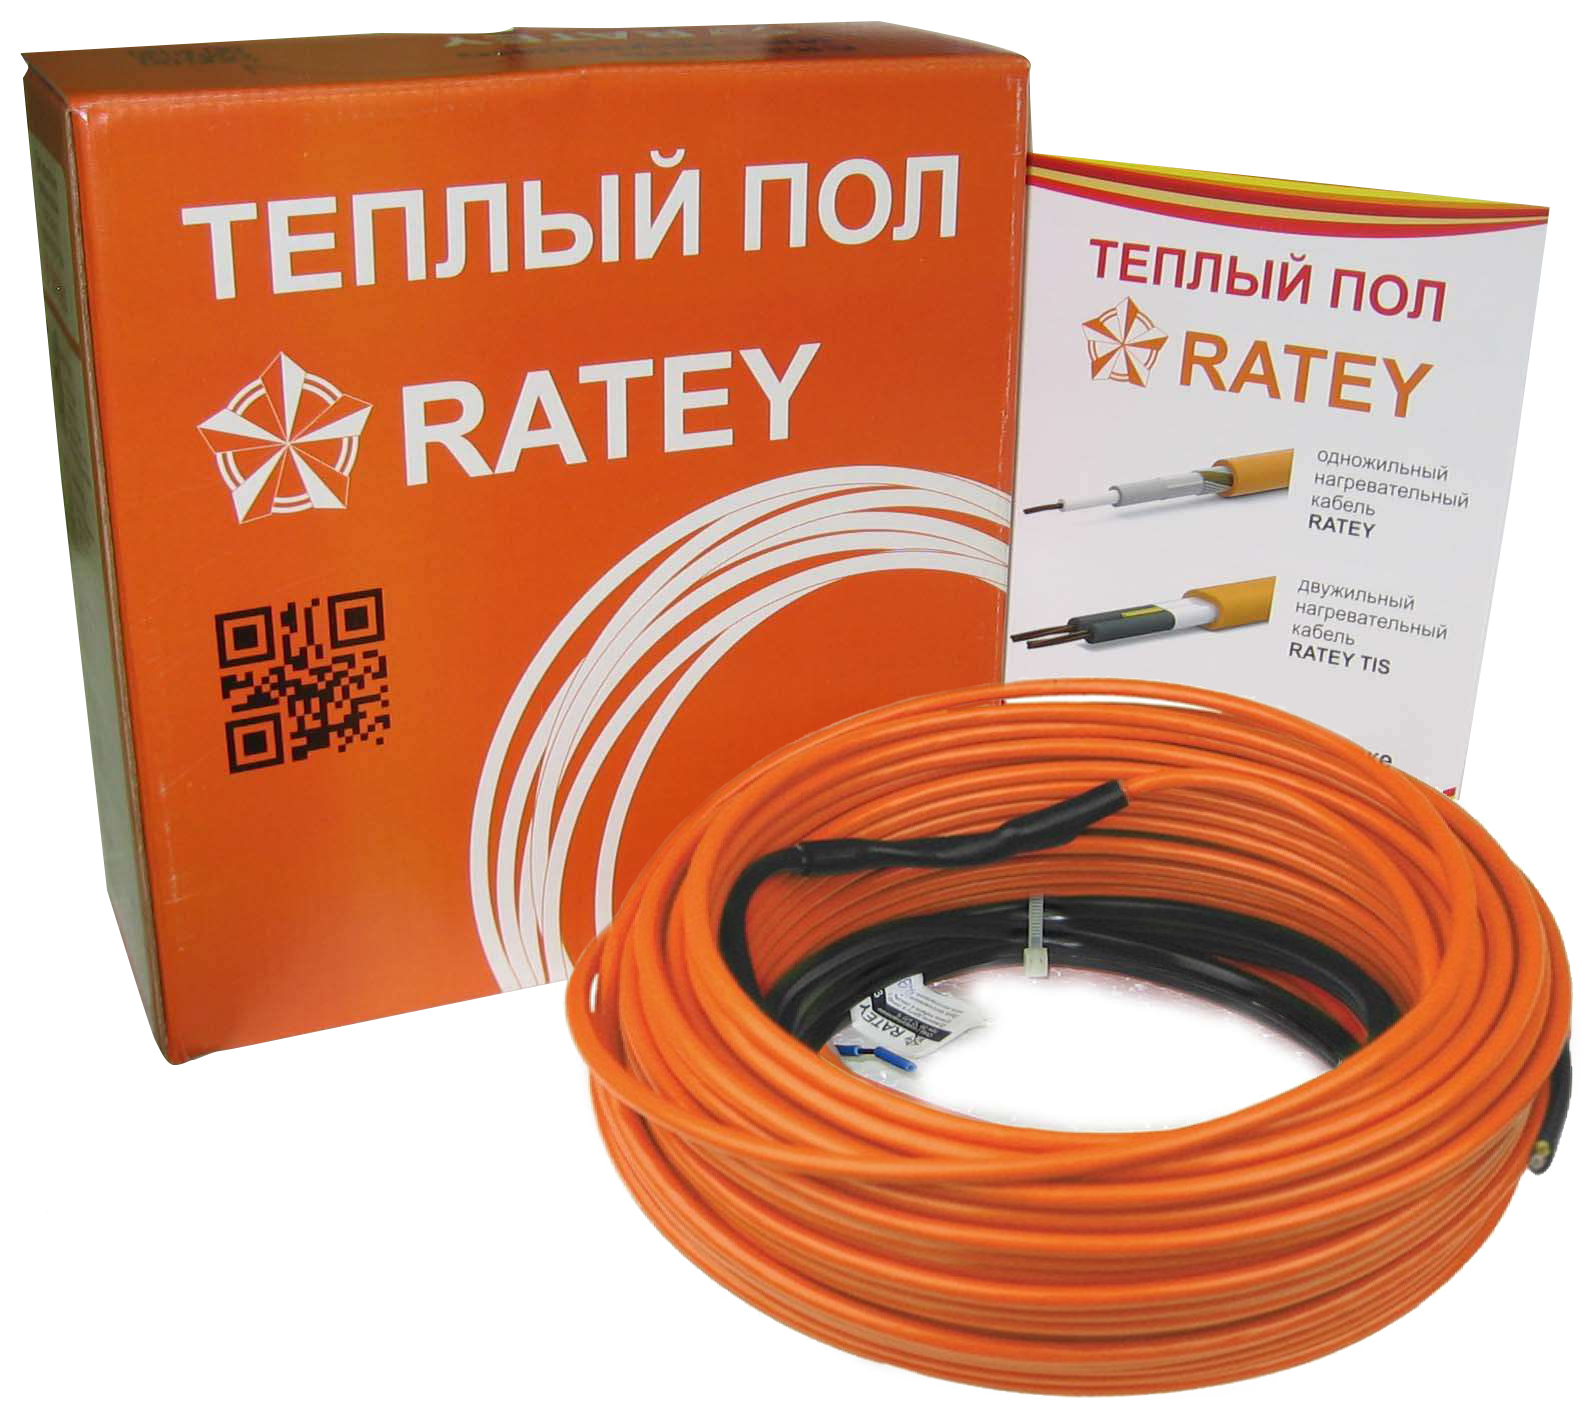 Электрический теплый пол Ratey RD1 0.280